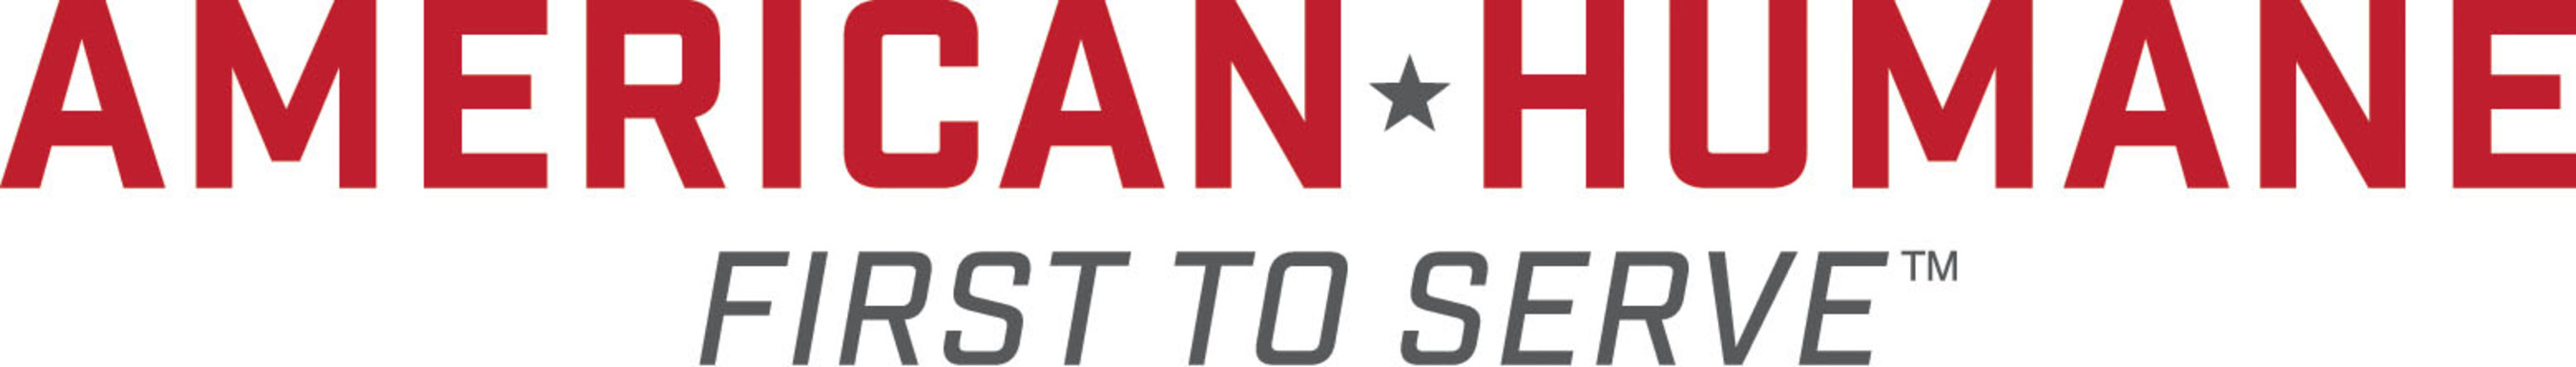 American Humane Association logo.